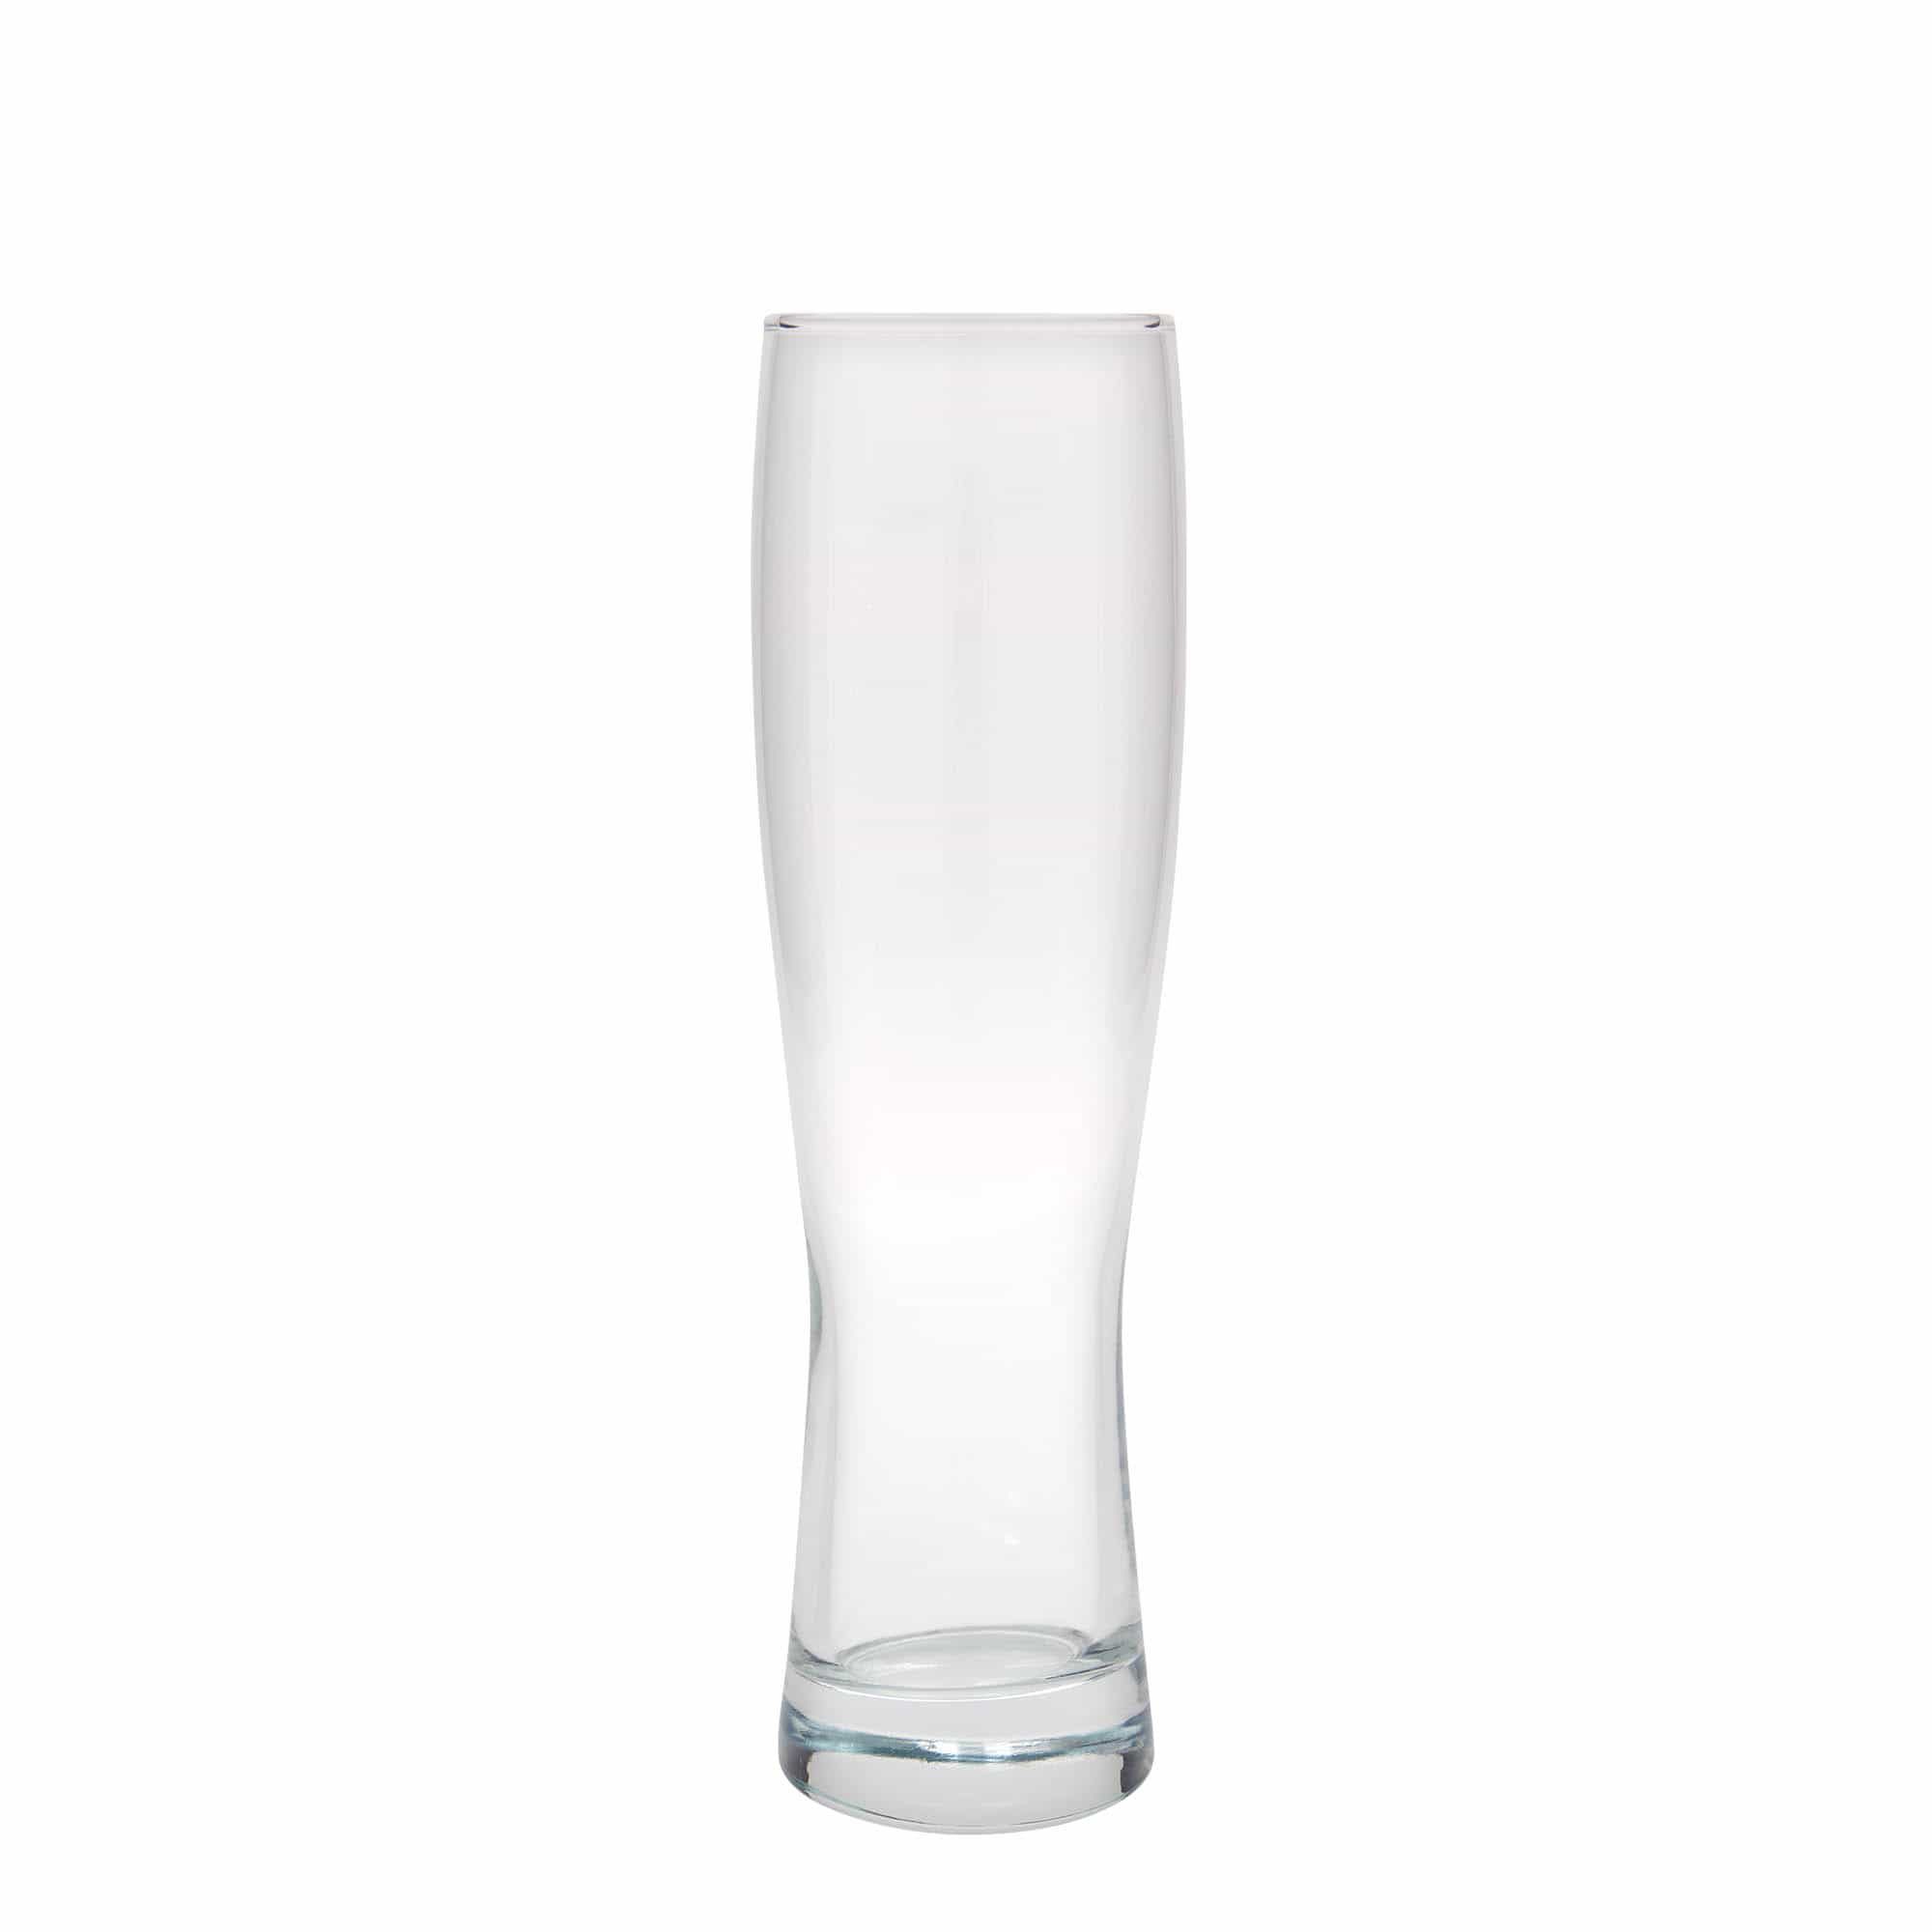 500 ml beer glass 'Monaco', glass